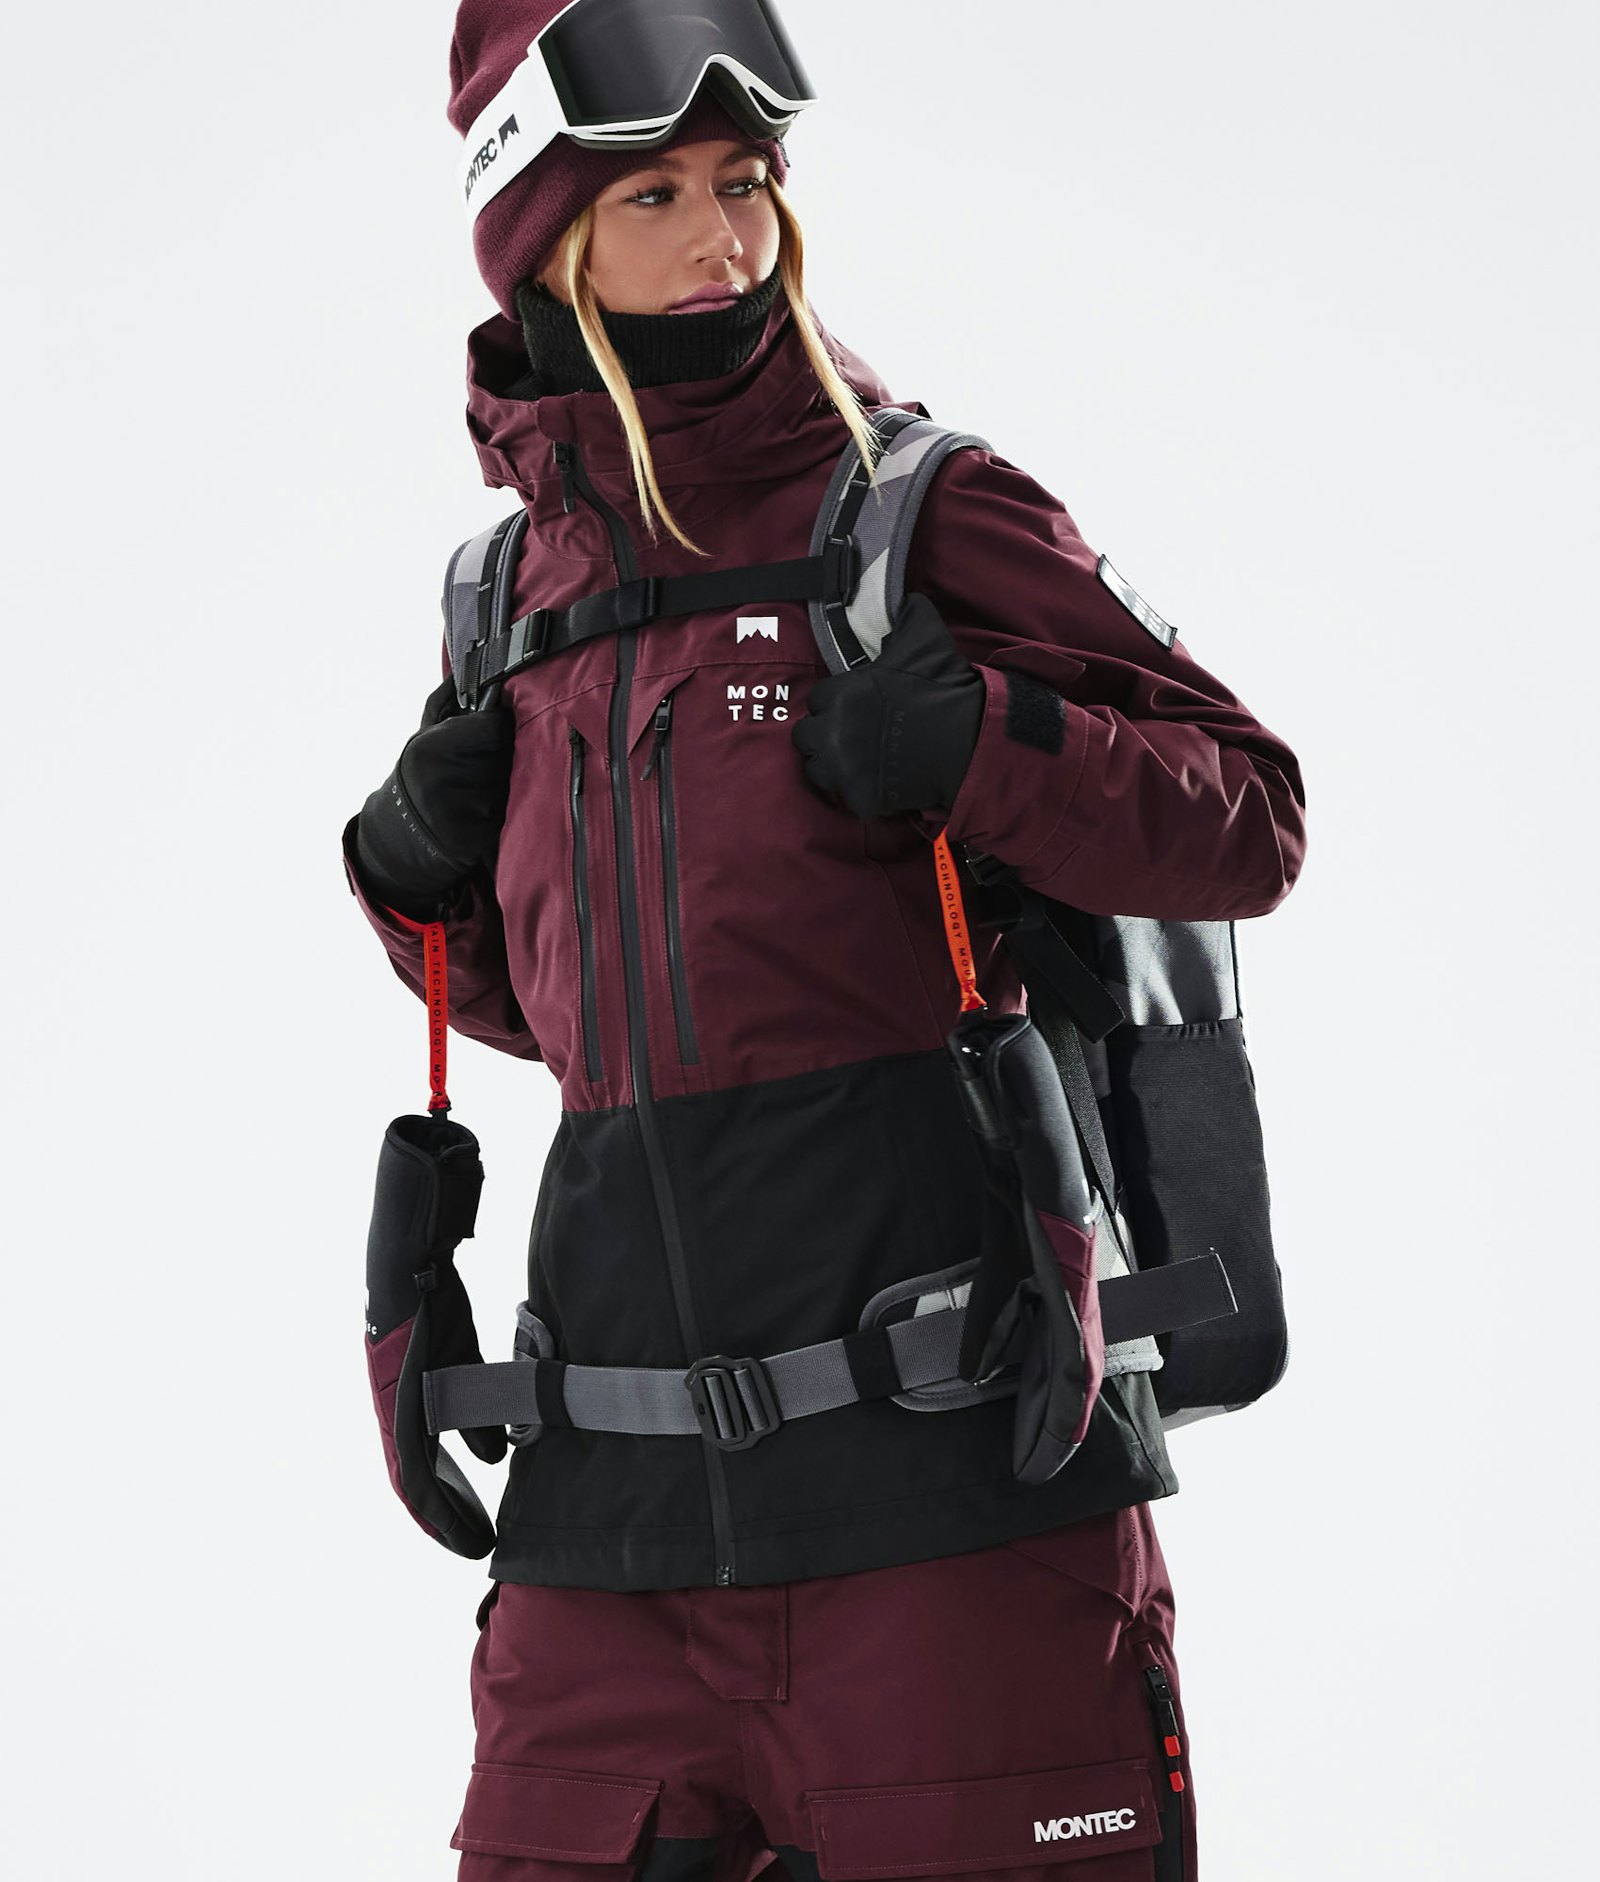 Moss W 2021 Veste de Ski Femme Burgundy/Black